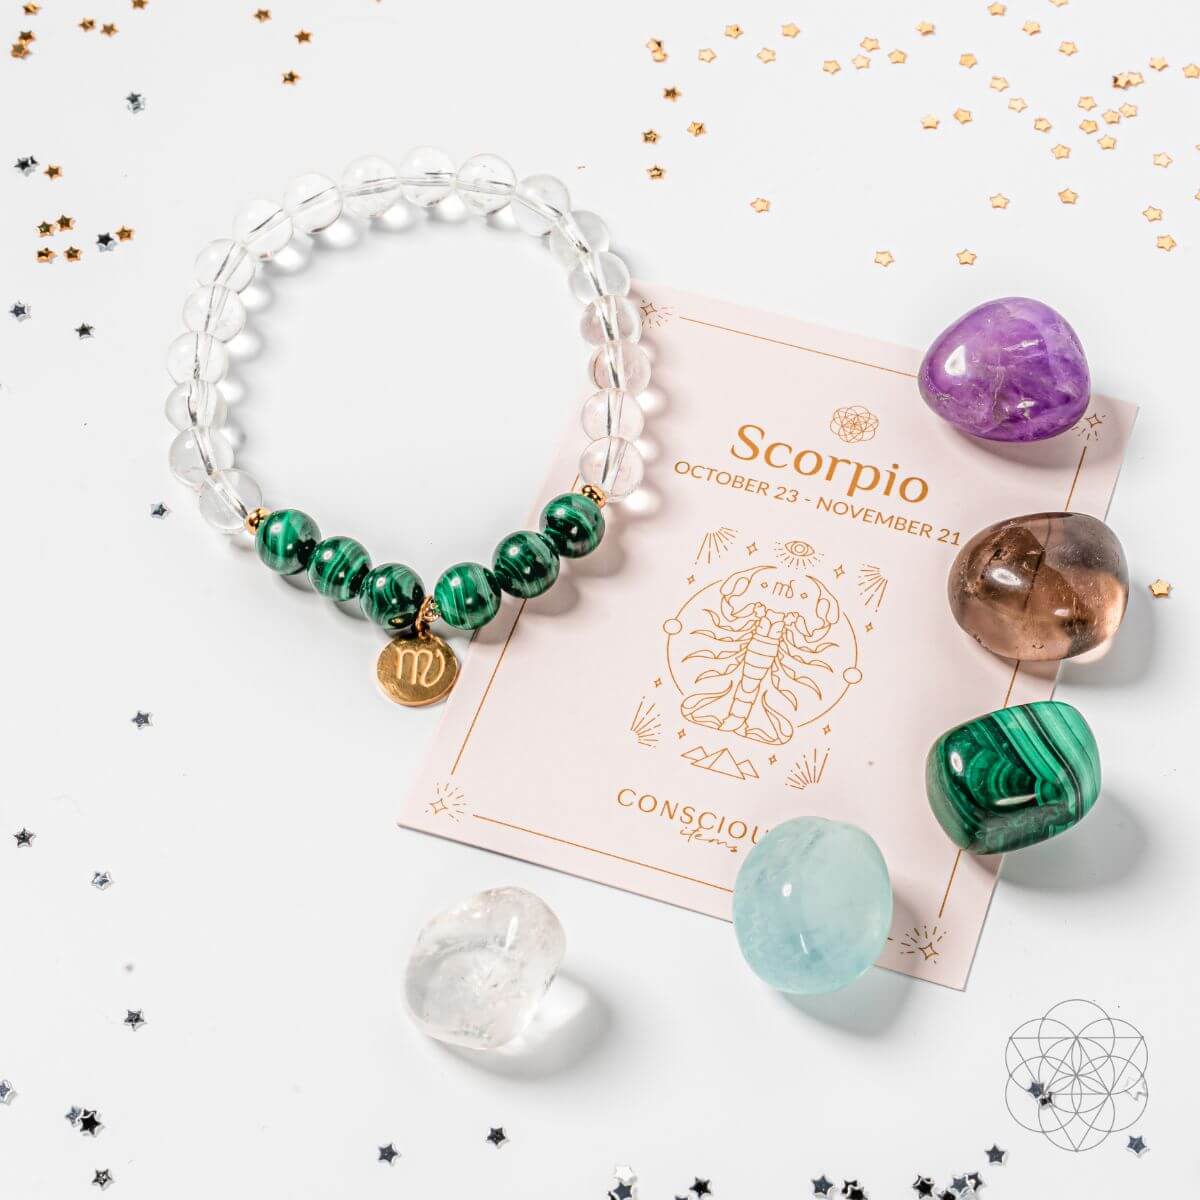 Scorpio Bracelet and Crystals Set